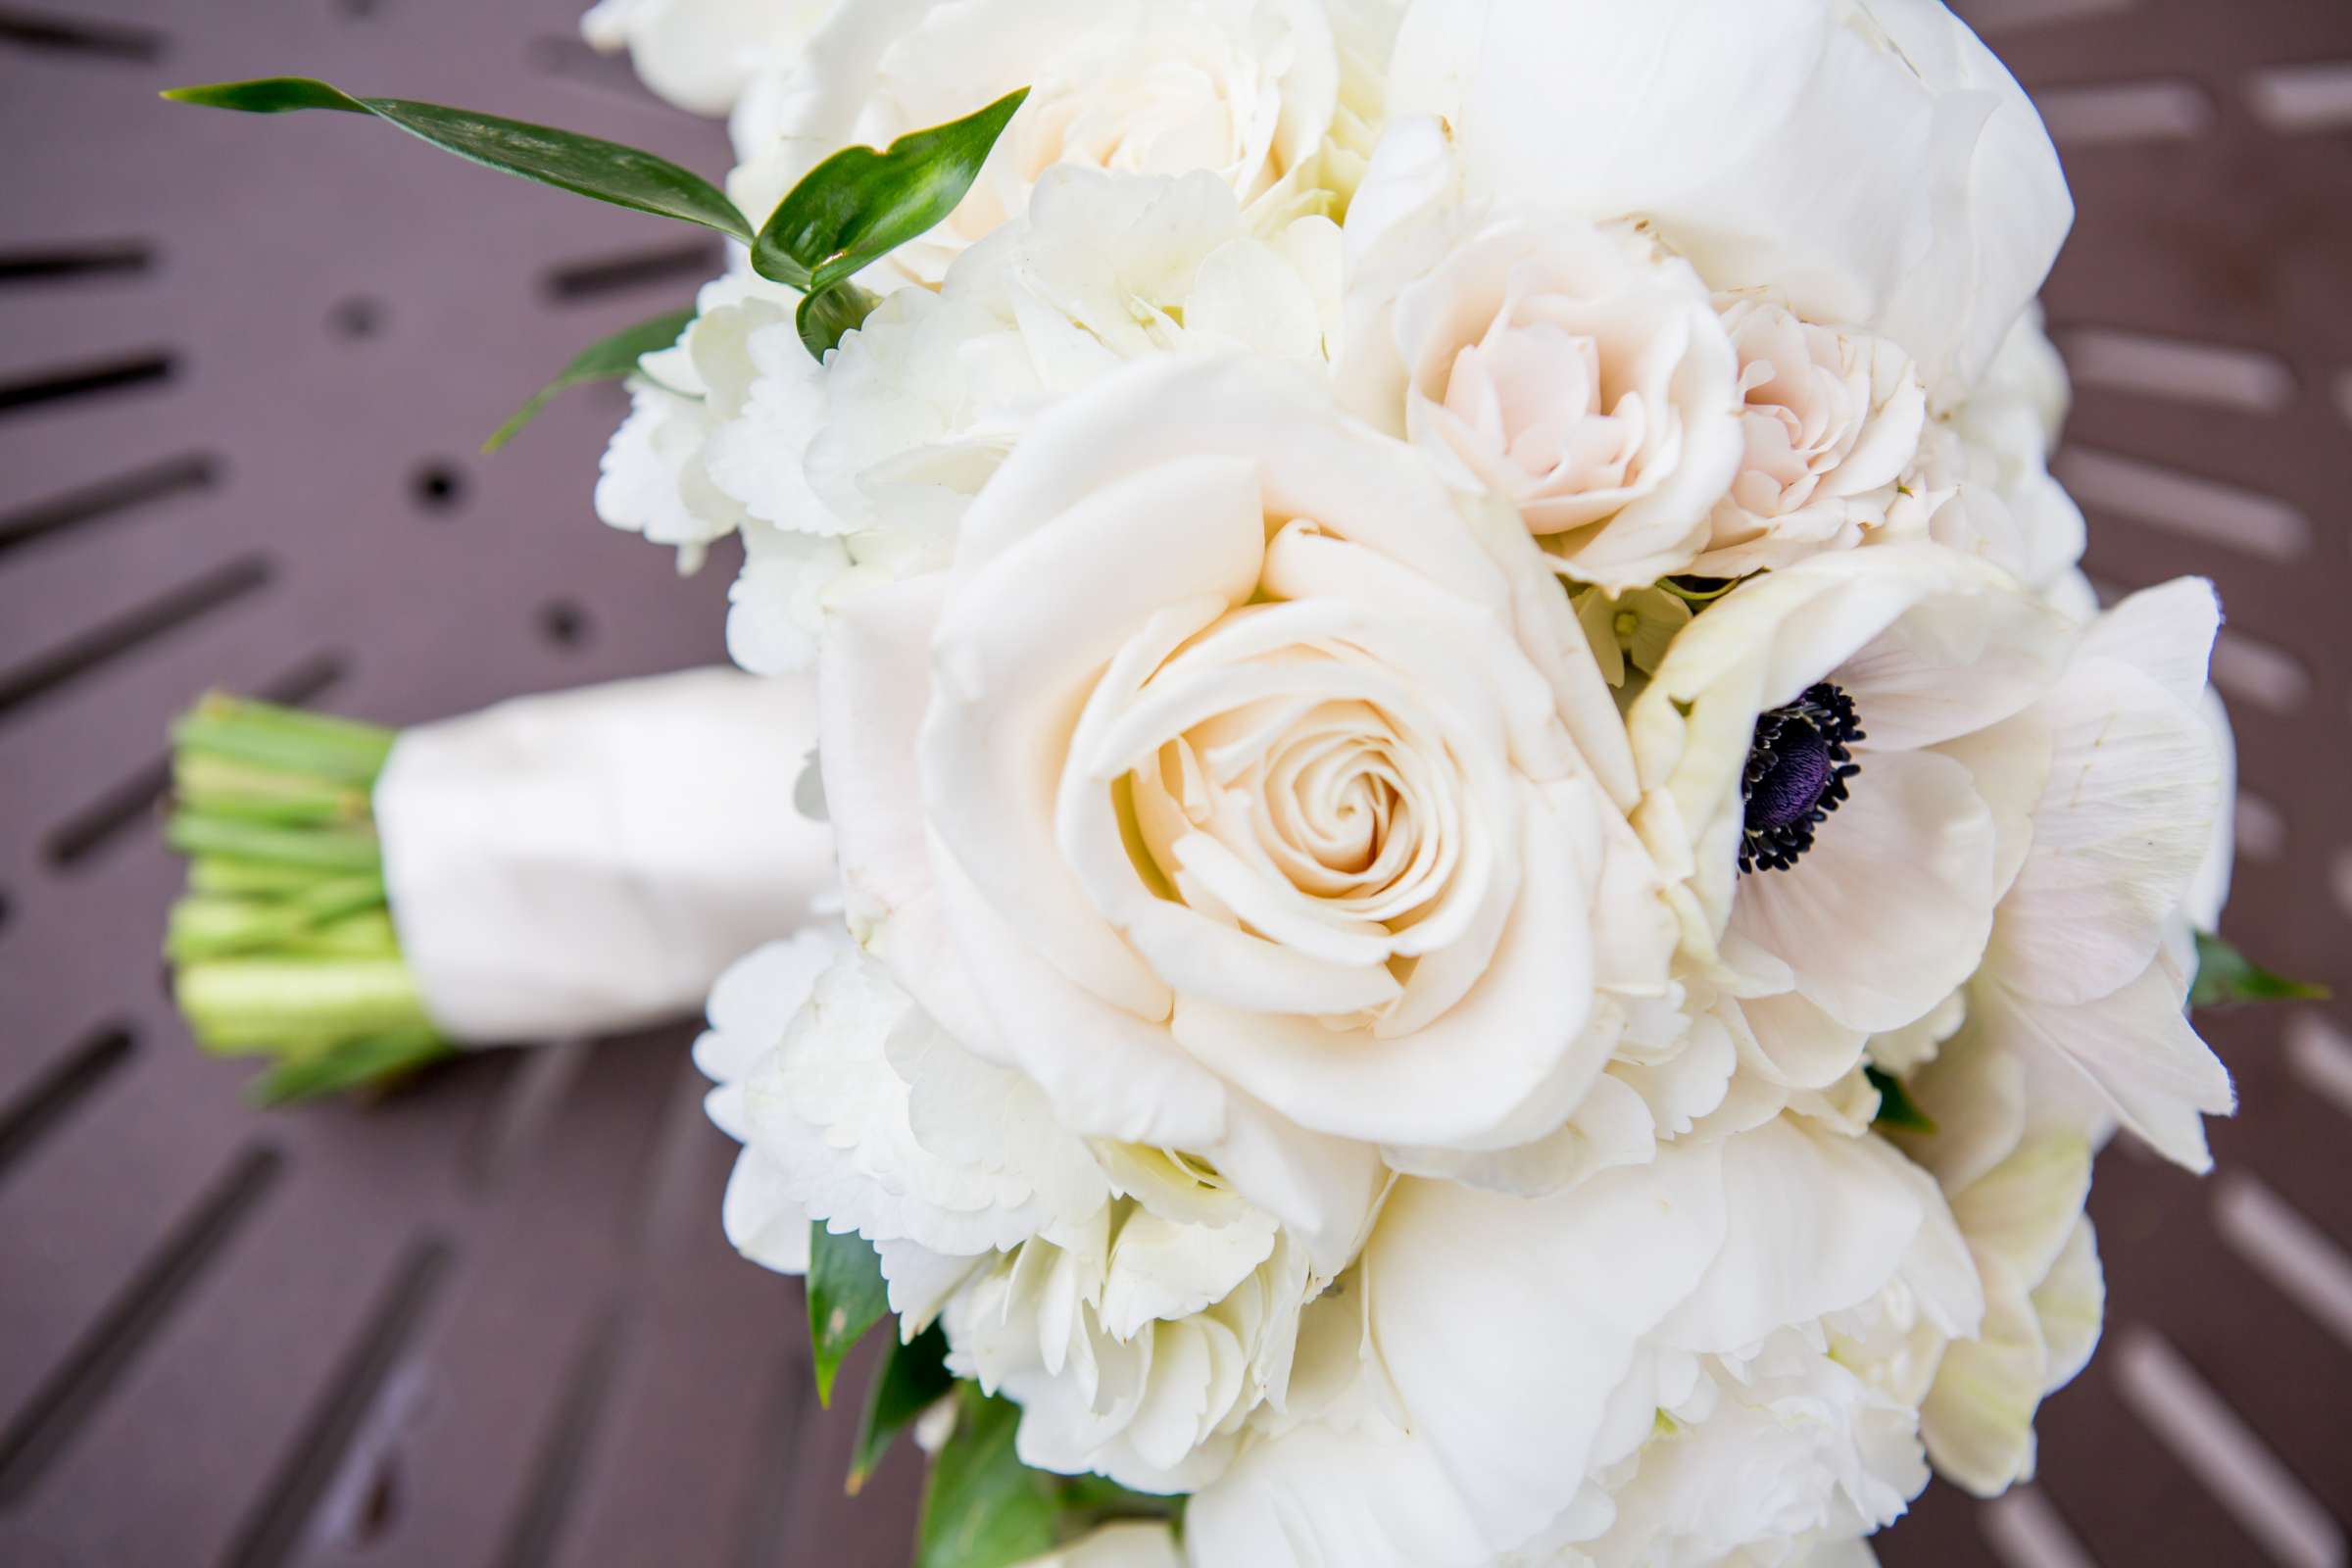 LOVIVER Artificial Victoria Rose Wedding Bridal Bouquet Flower Floral Arrangements White 